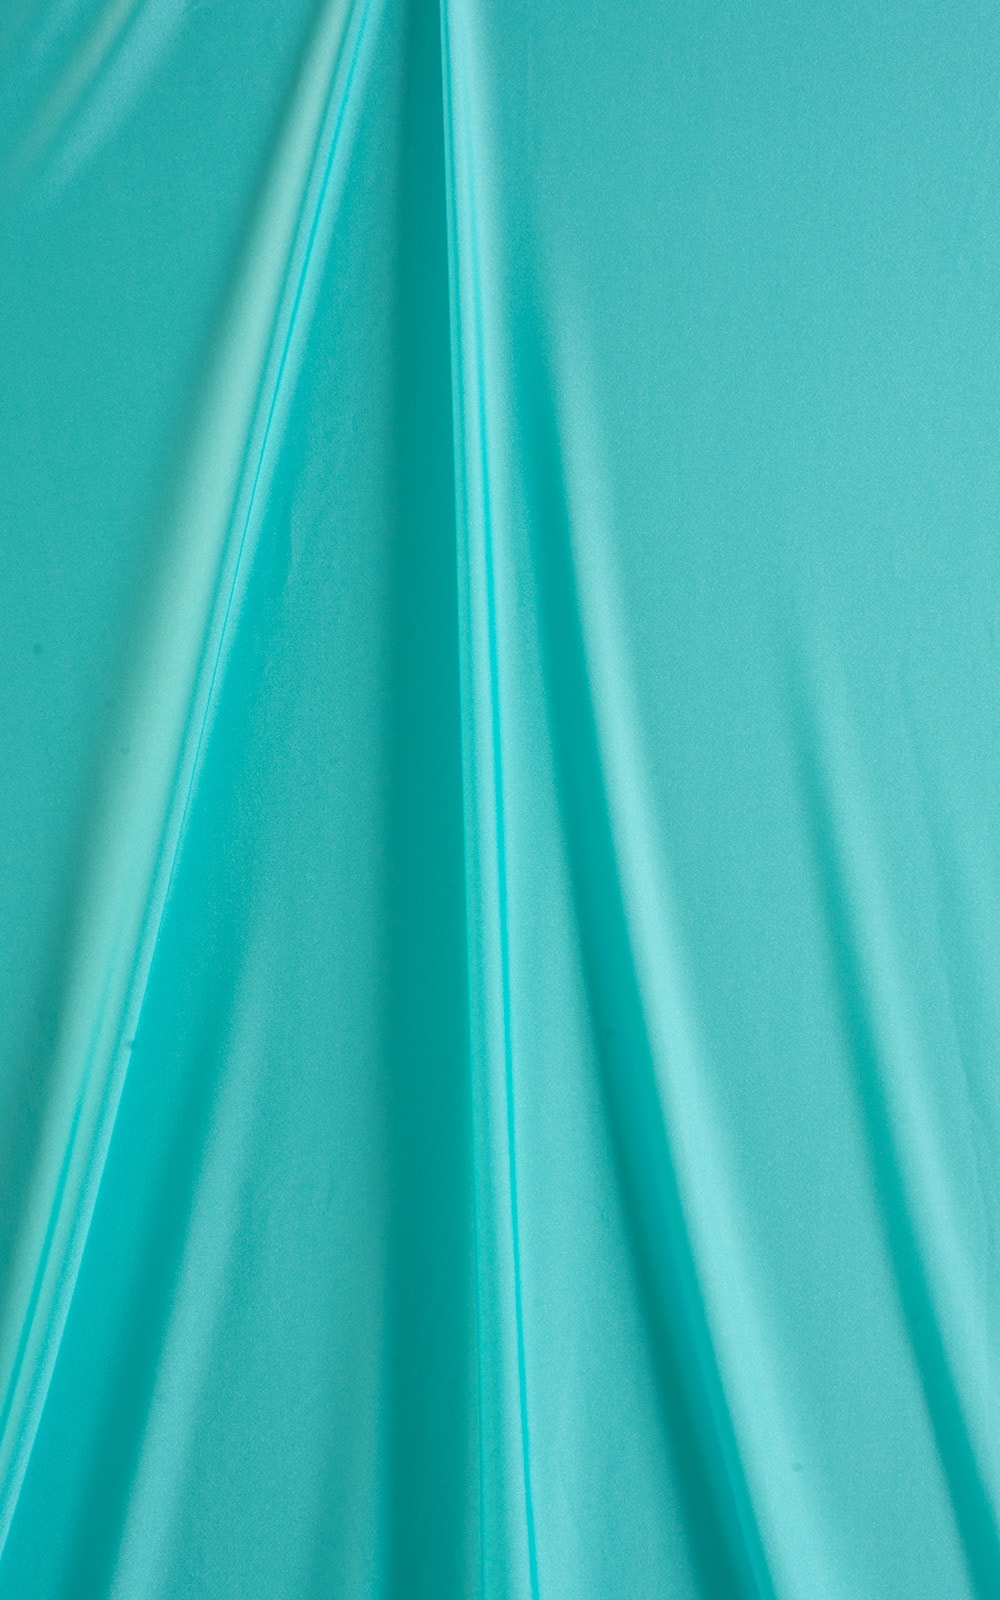 solid color aquamarine aqua green stretchy swimsuit fabric in nylon lycra